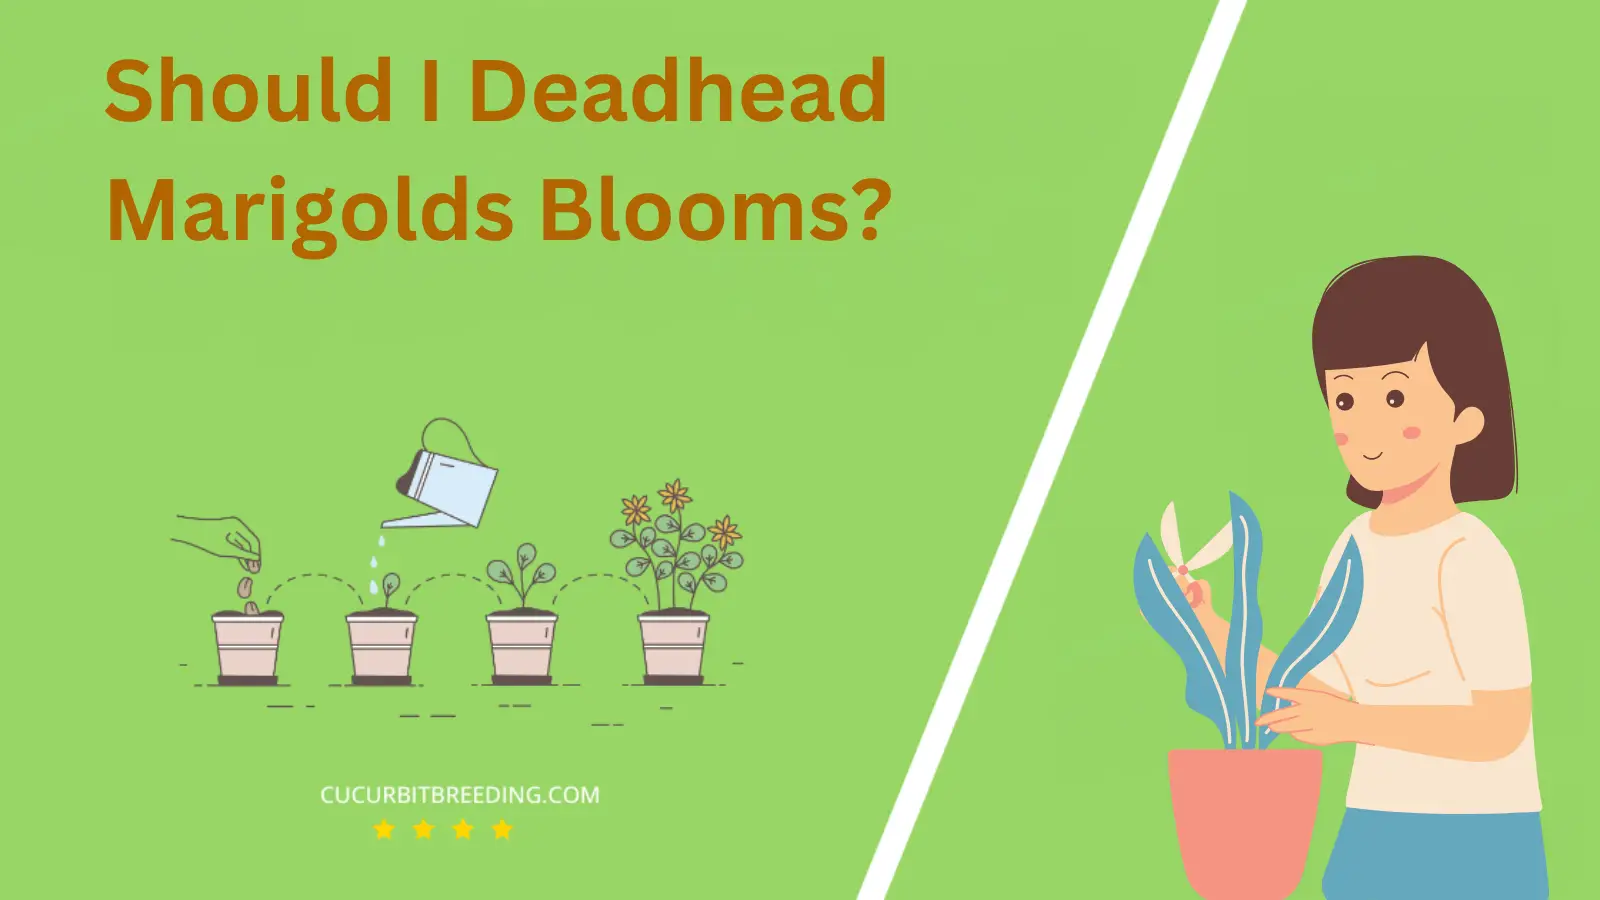 Should I Deadhead Marigolds Blooms?